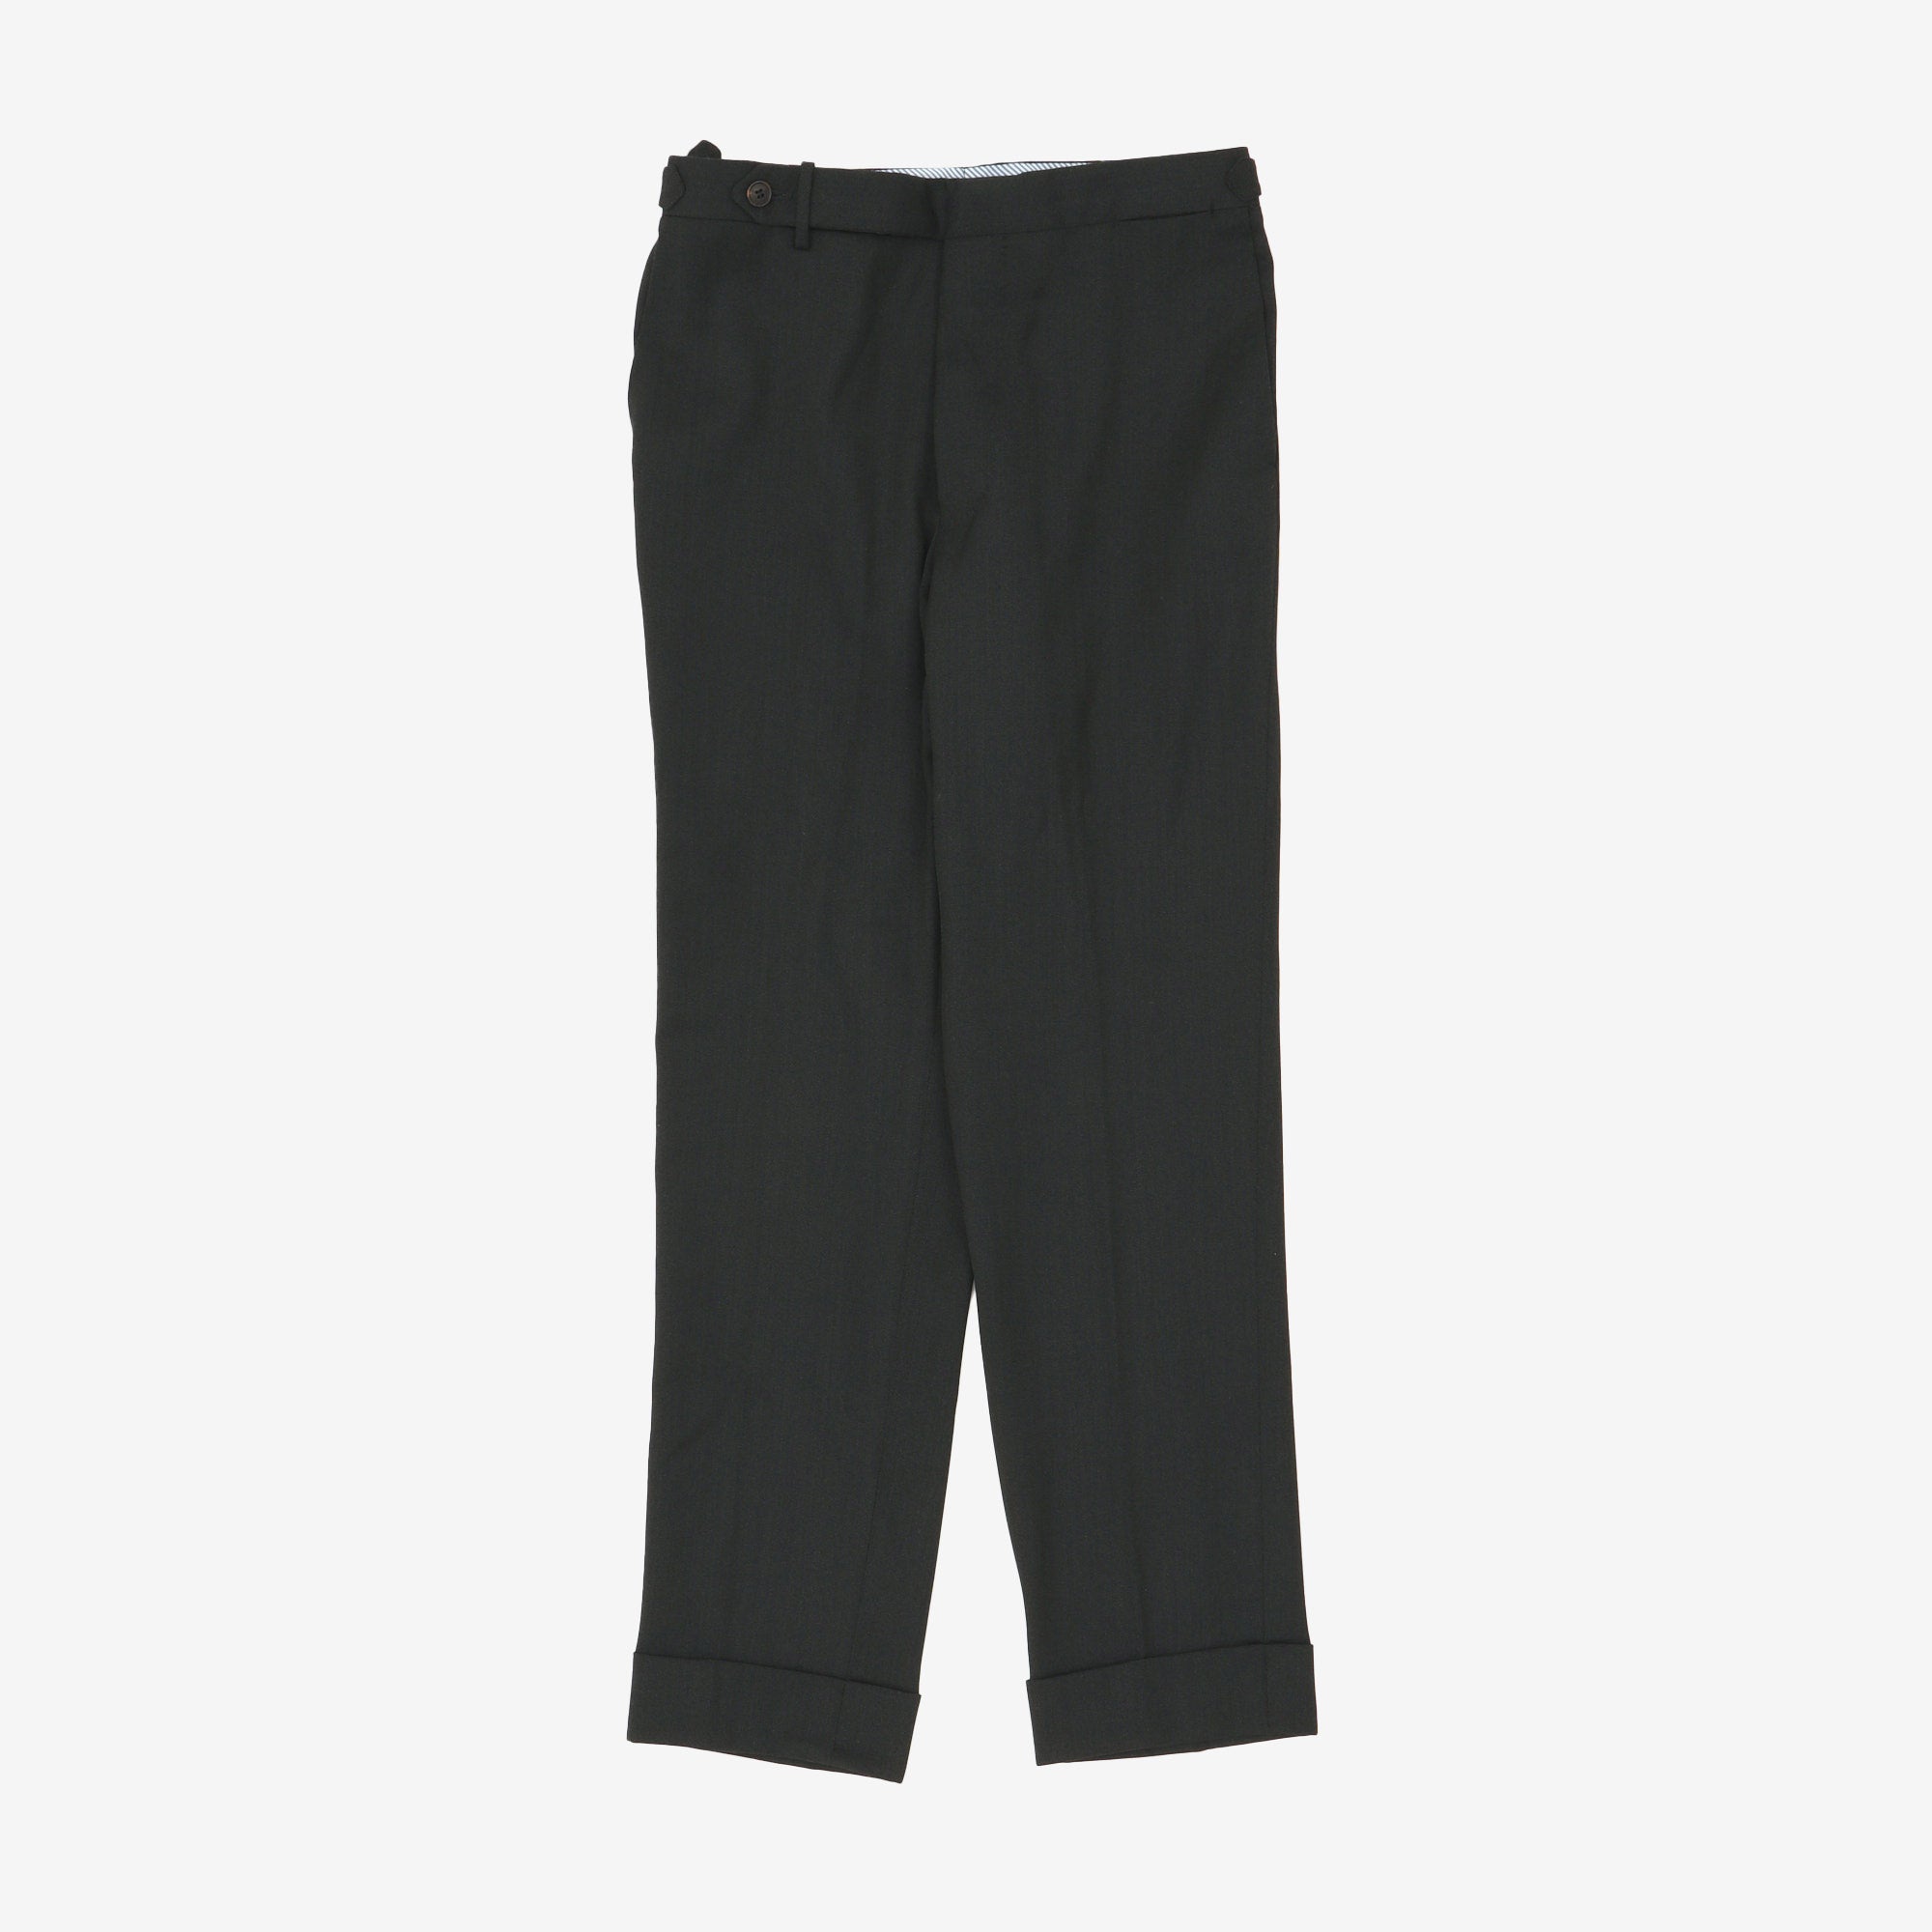 Covert Cloth Trousers (31W x 28L)